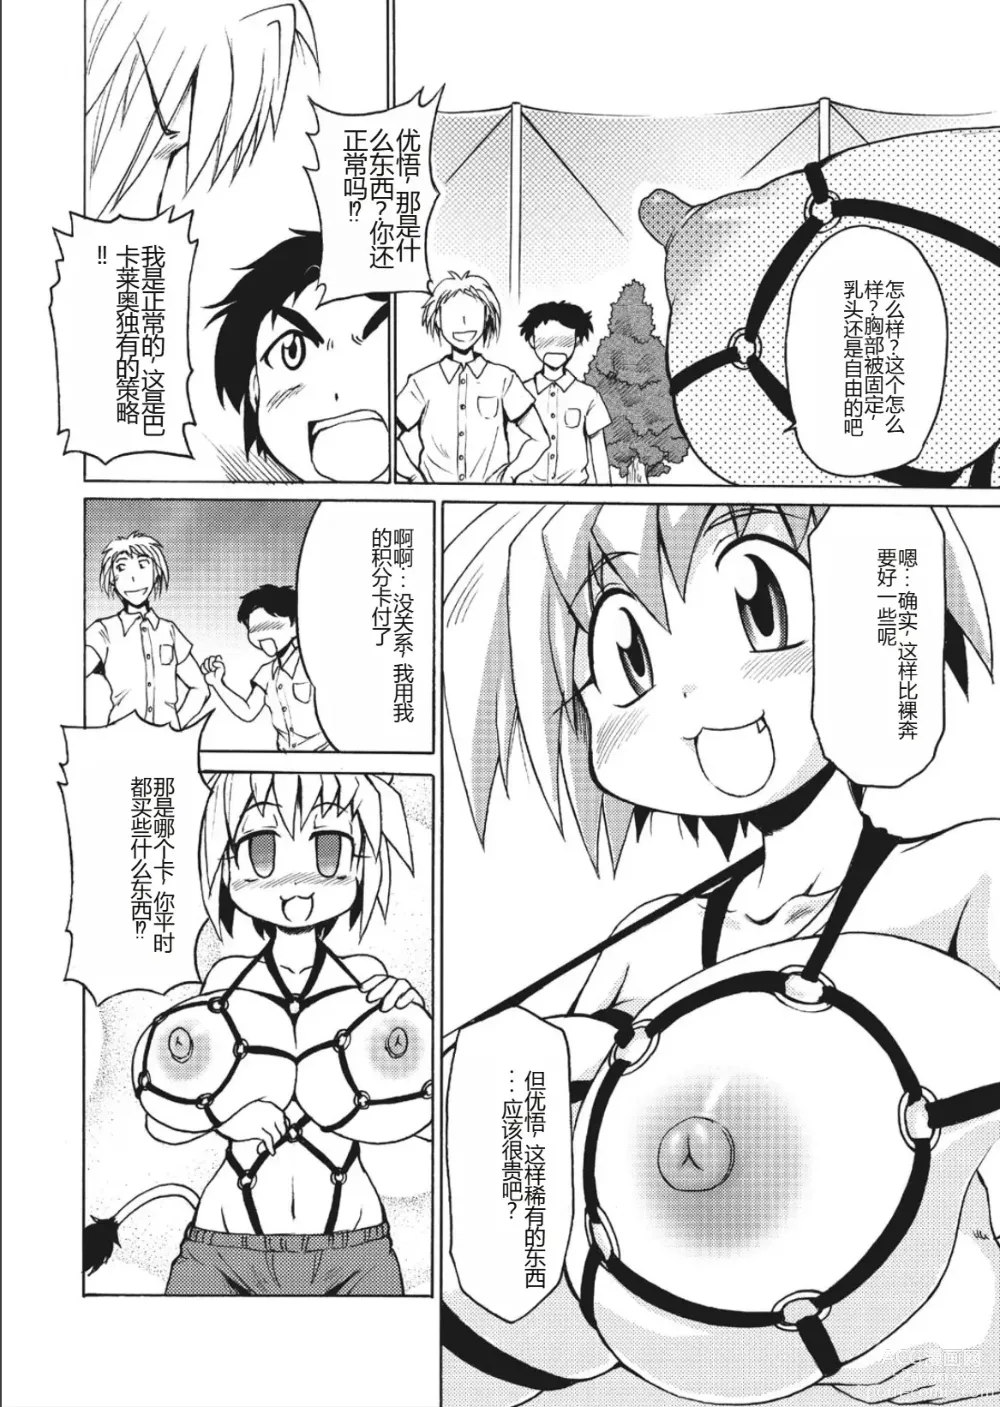 Page 26 of manga Lion Heart